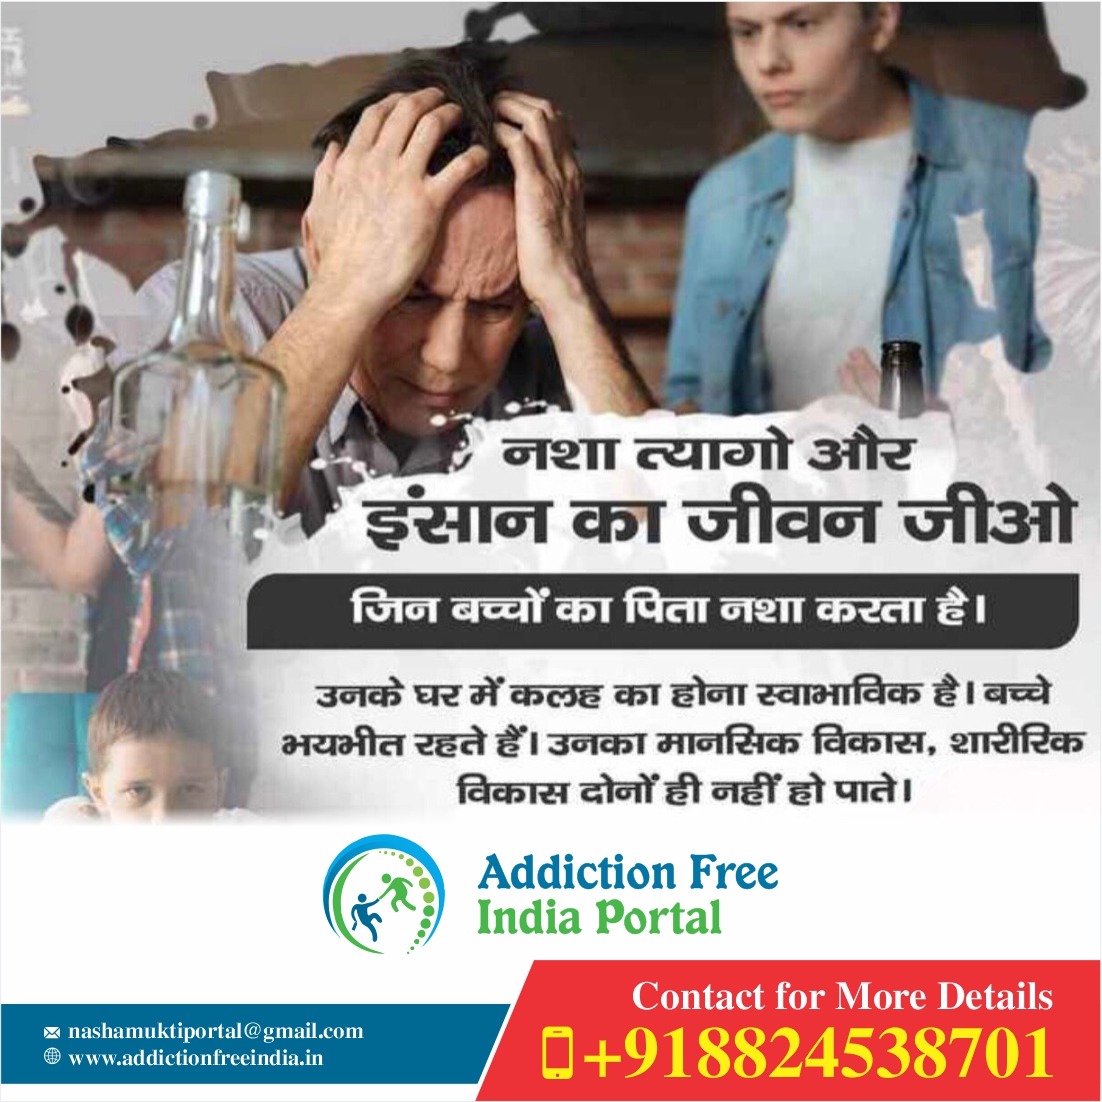 PRERNA DRUG DE-ADDICTION TREATMENT CUM REHAB CENTRE in Lucknow